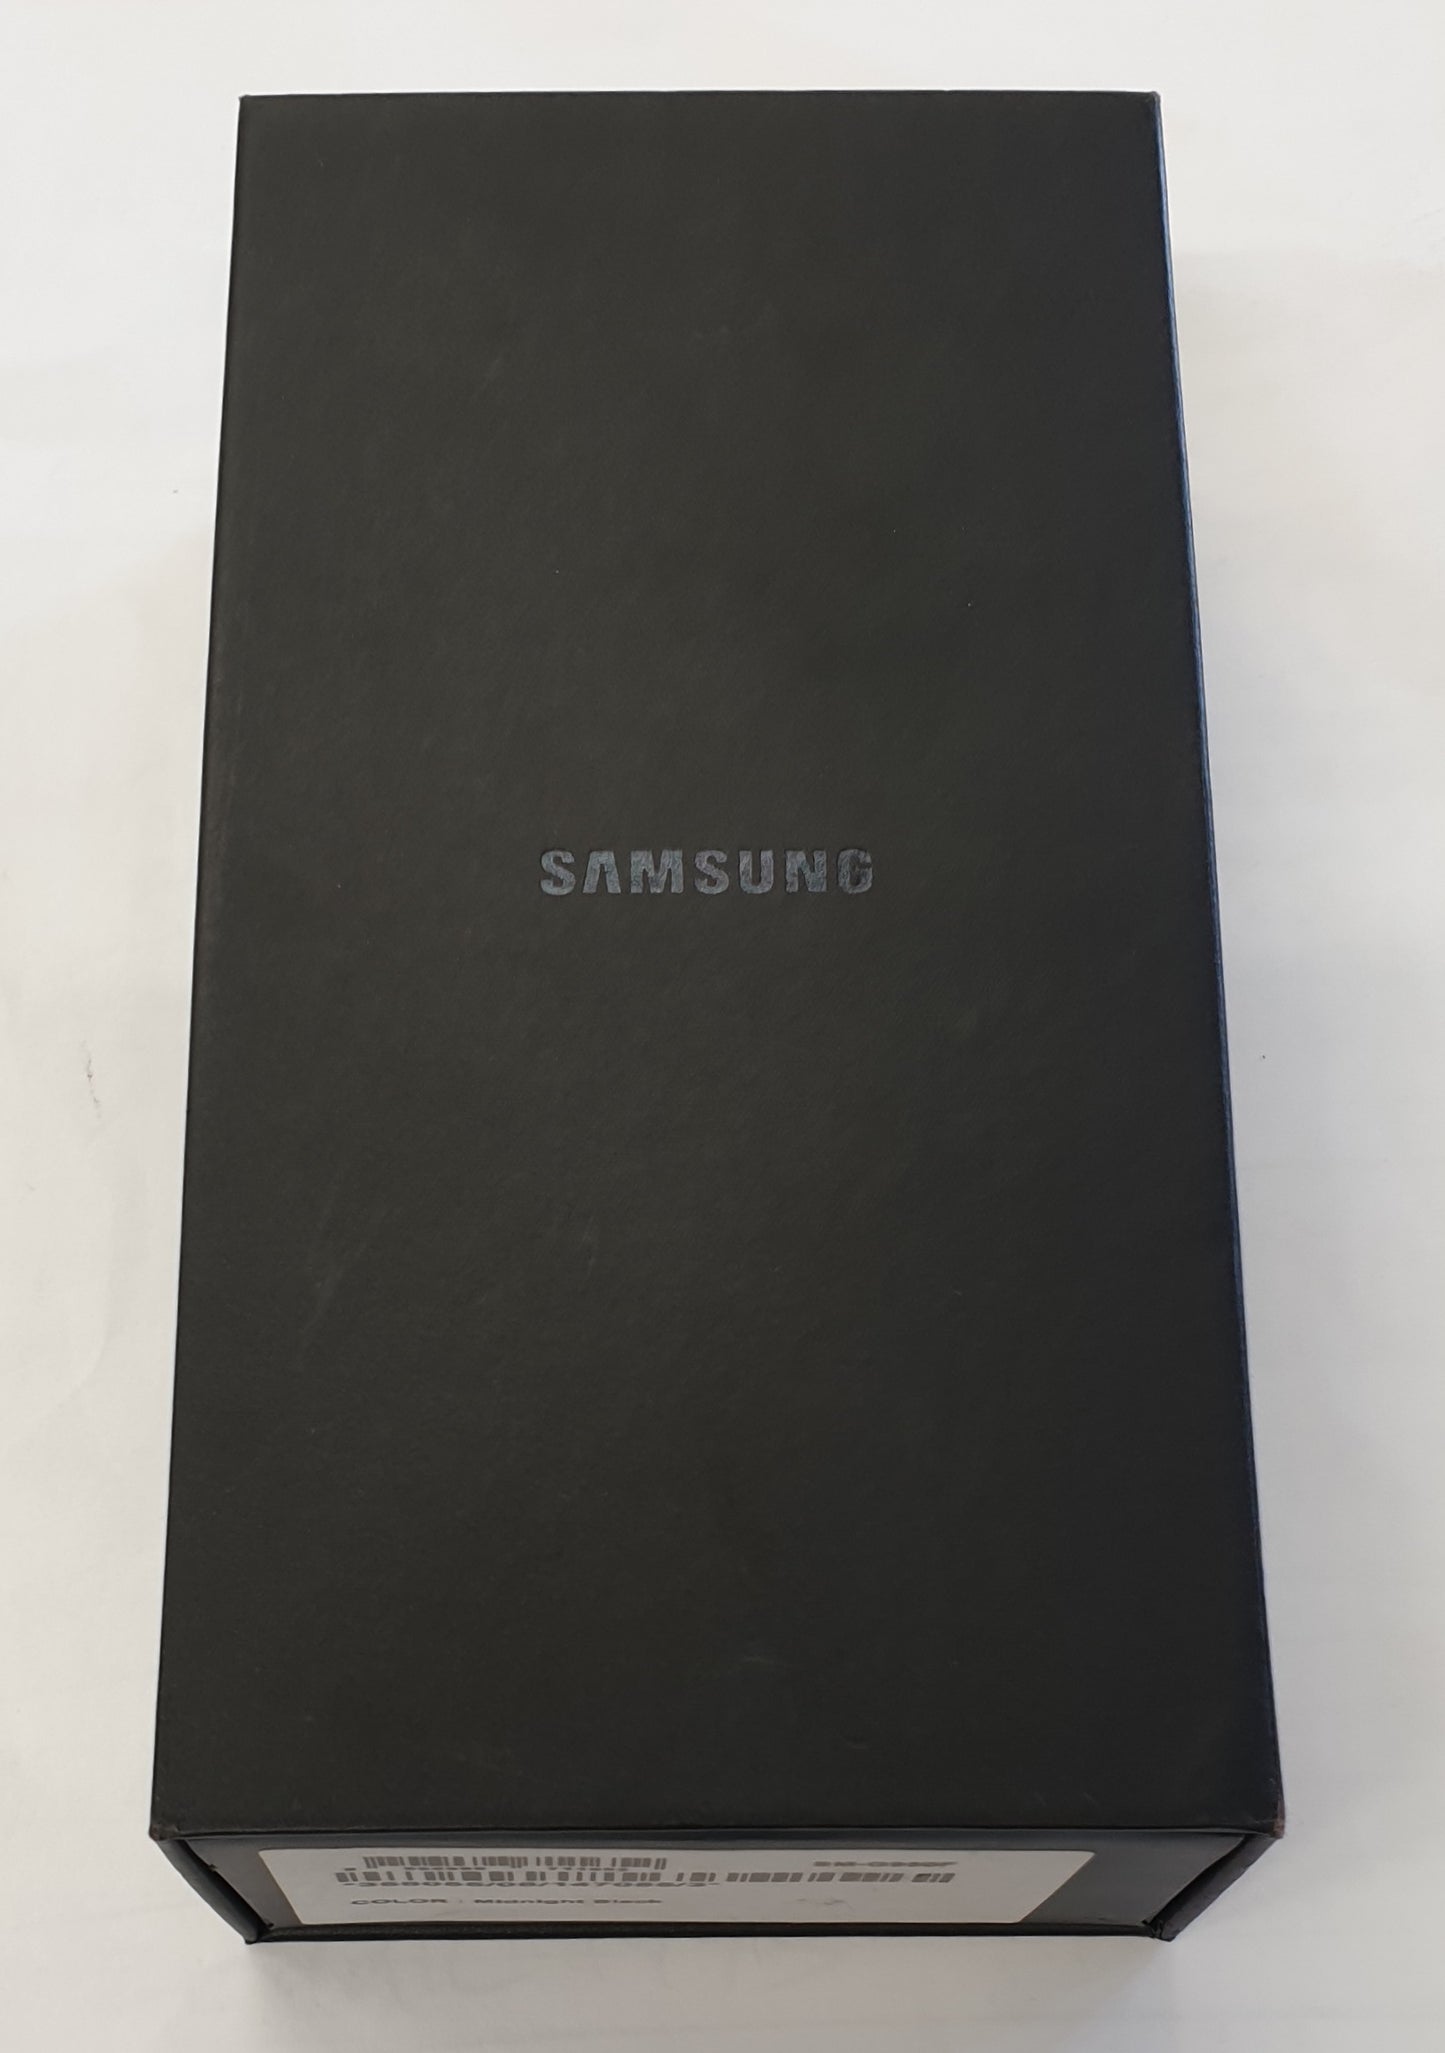 Mint Original Samsung S9 64gb (Black)